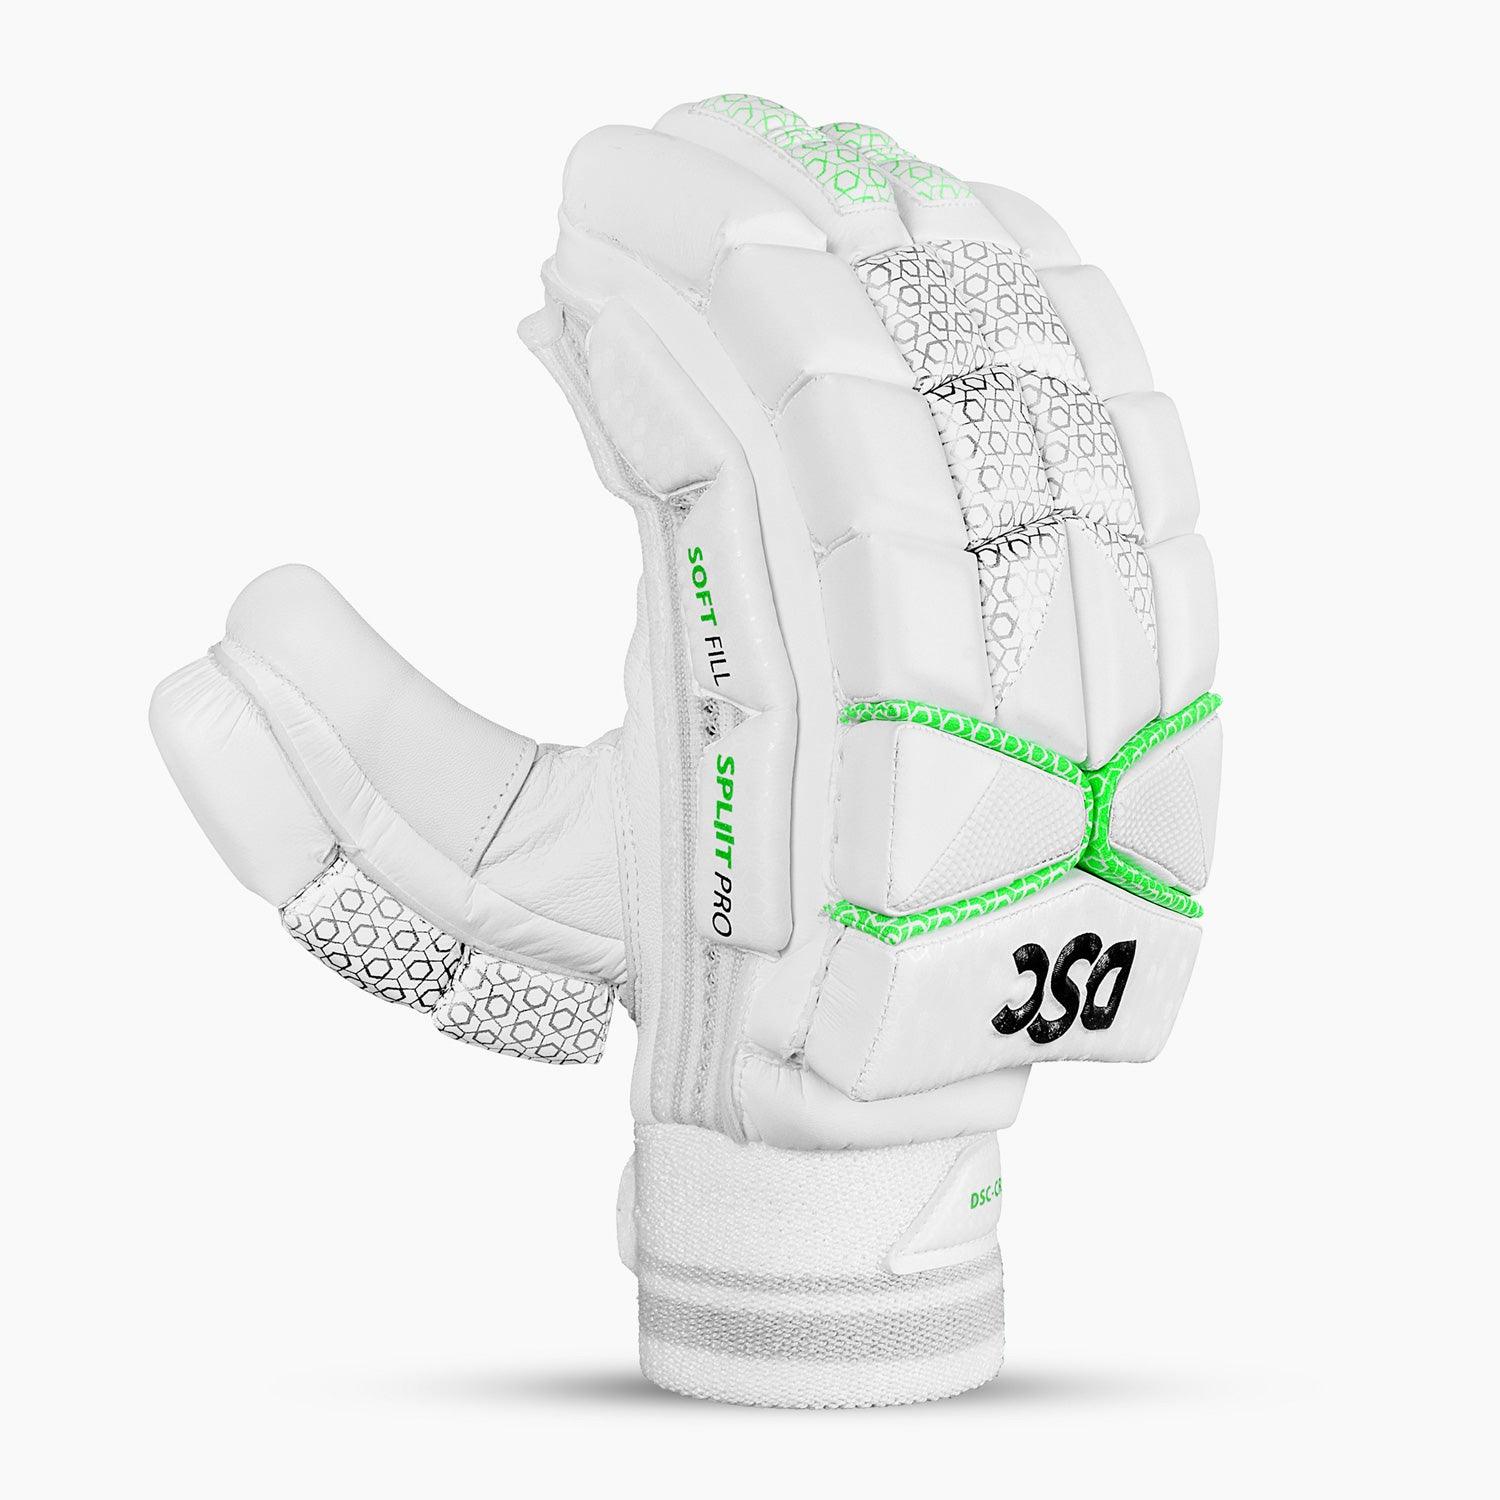 DSC Spliit Pro Cricket Batting Gloves - ADULT - AT Sports